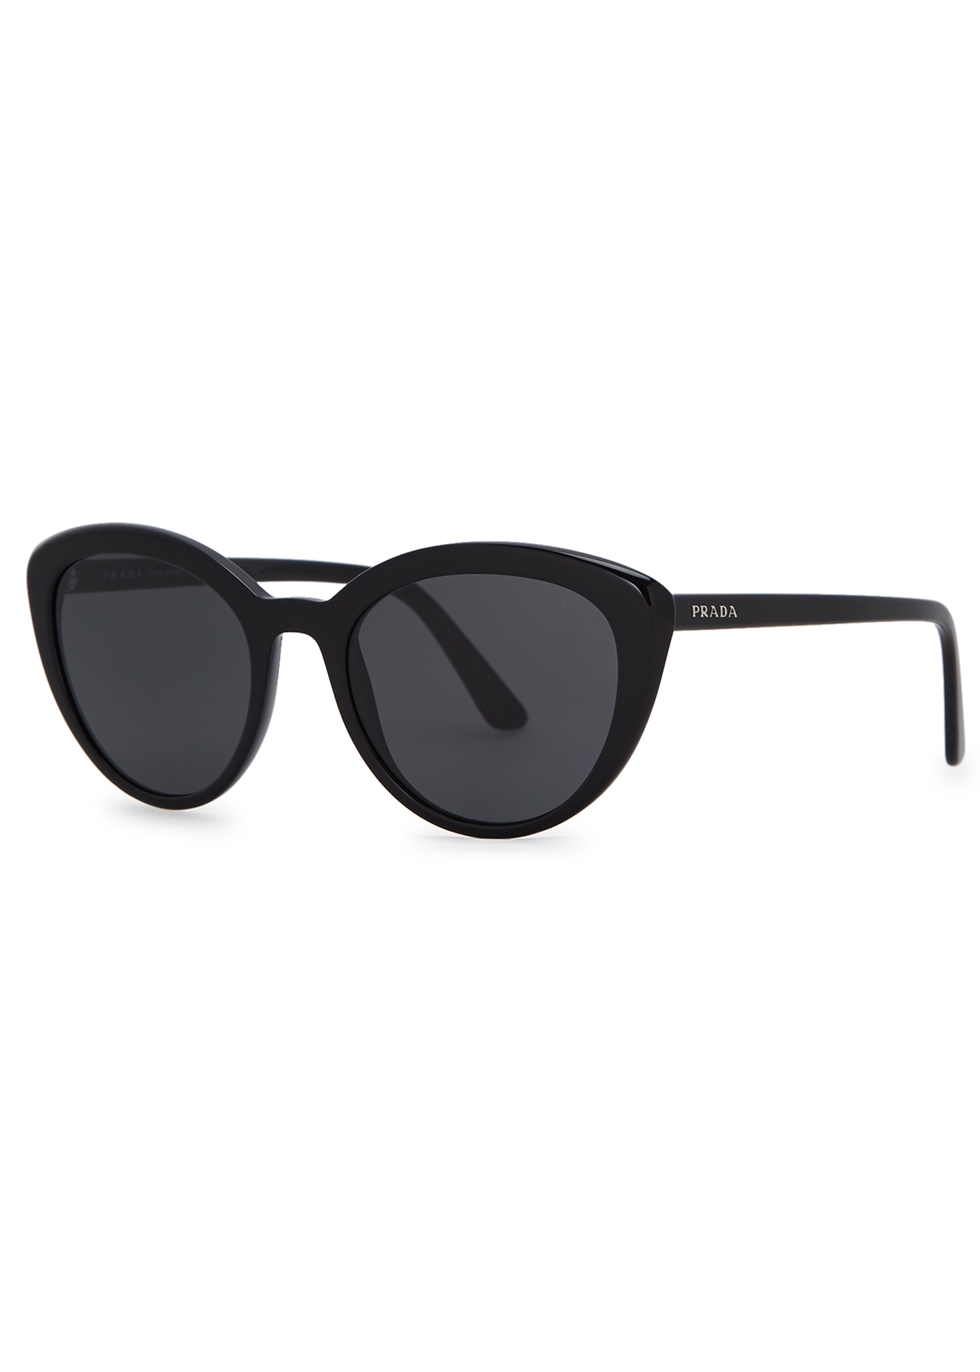 prada eye cat sunglasses